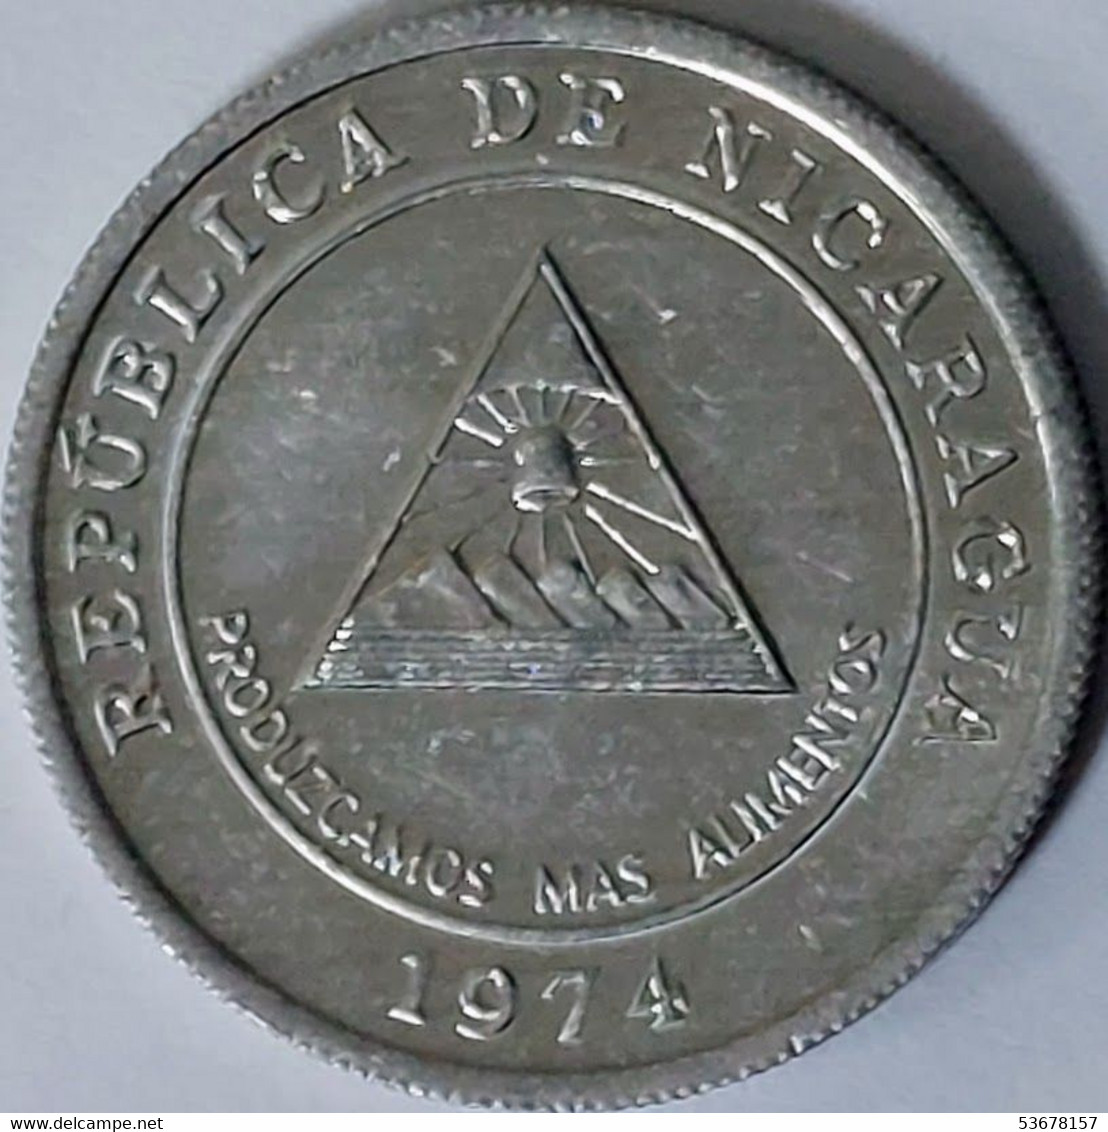 Nicaragua - 5 Centavos 1974, FAO - Let's Produce More Food, KM# 28 (#1565) - Nicaragua